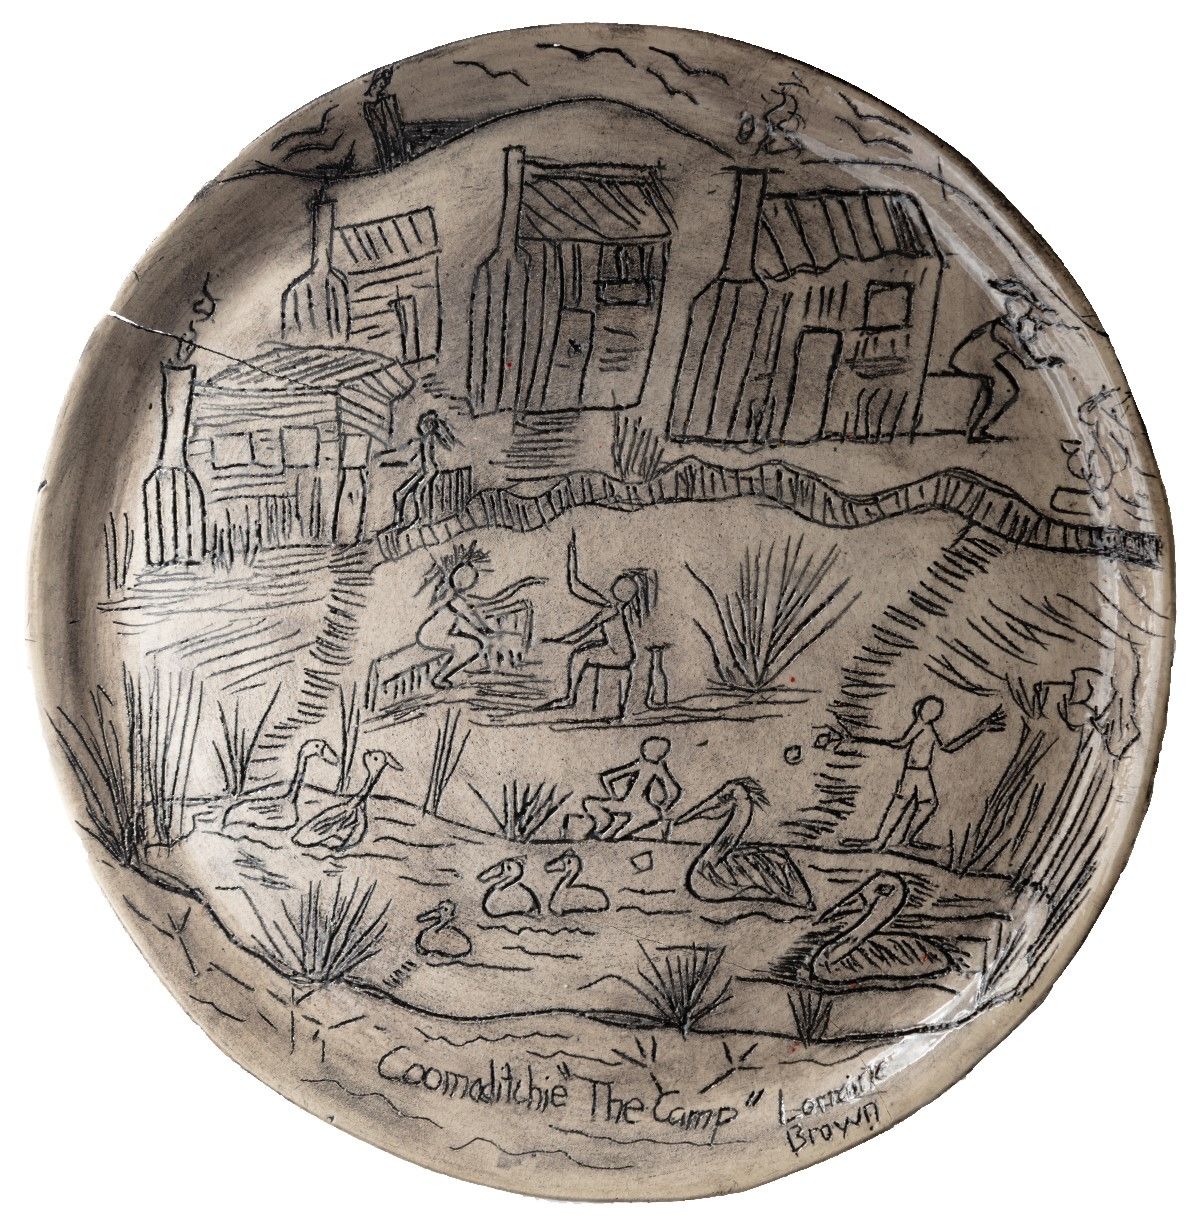 'Coomaditchie - The camp', Lorraine Brown, 2022, raku clay with underglaze, 39.5cm   (diameter) x 2cm.  